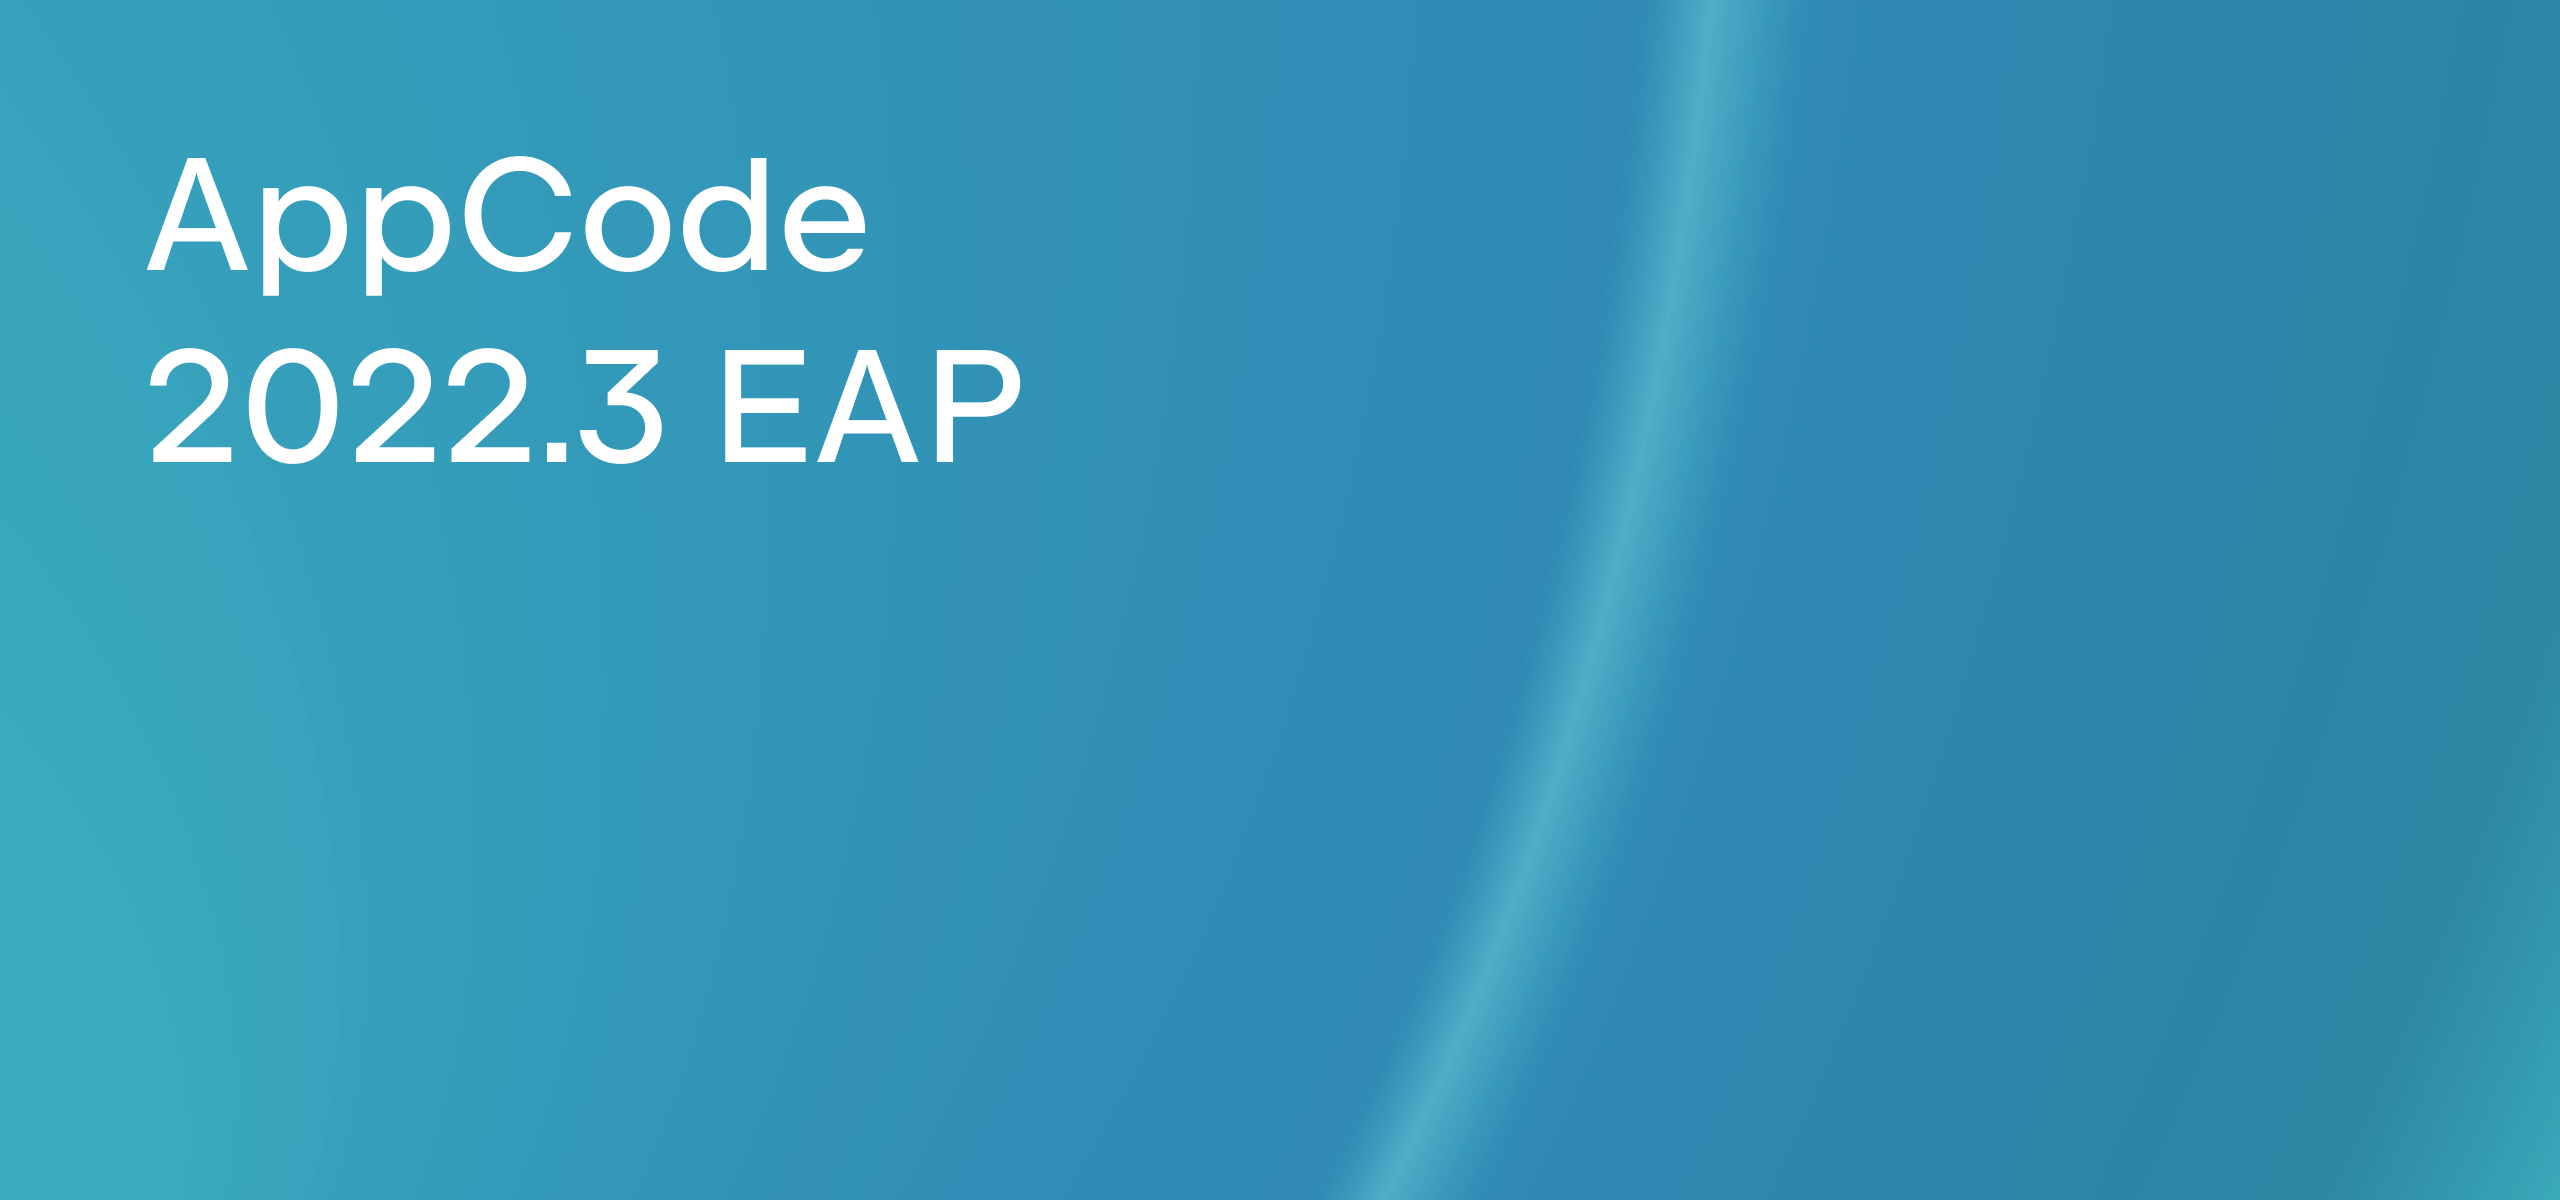 AppCode starts the 2022.3 EAP